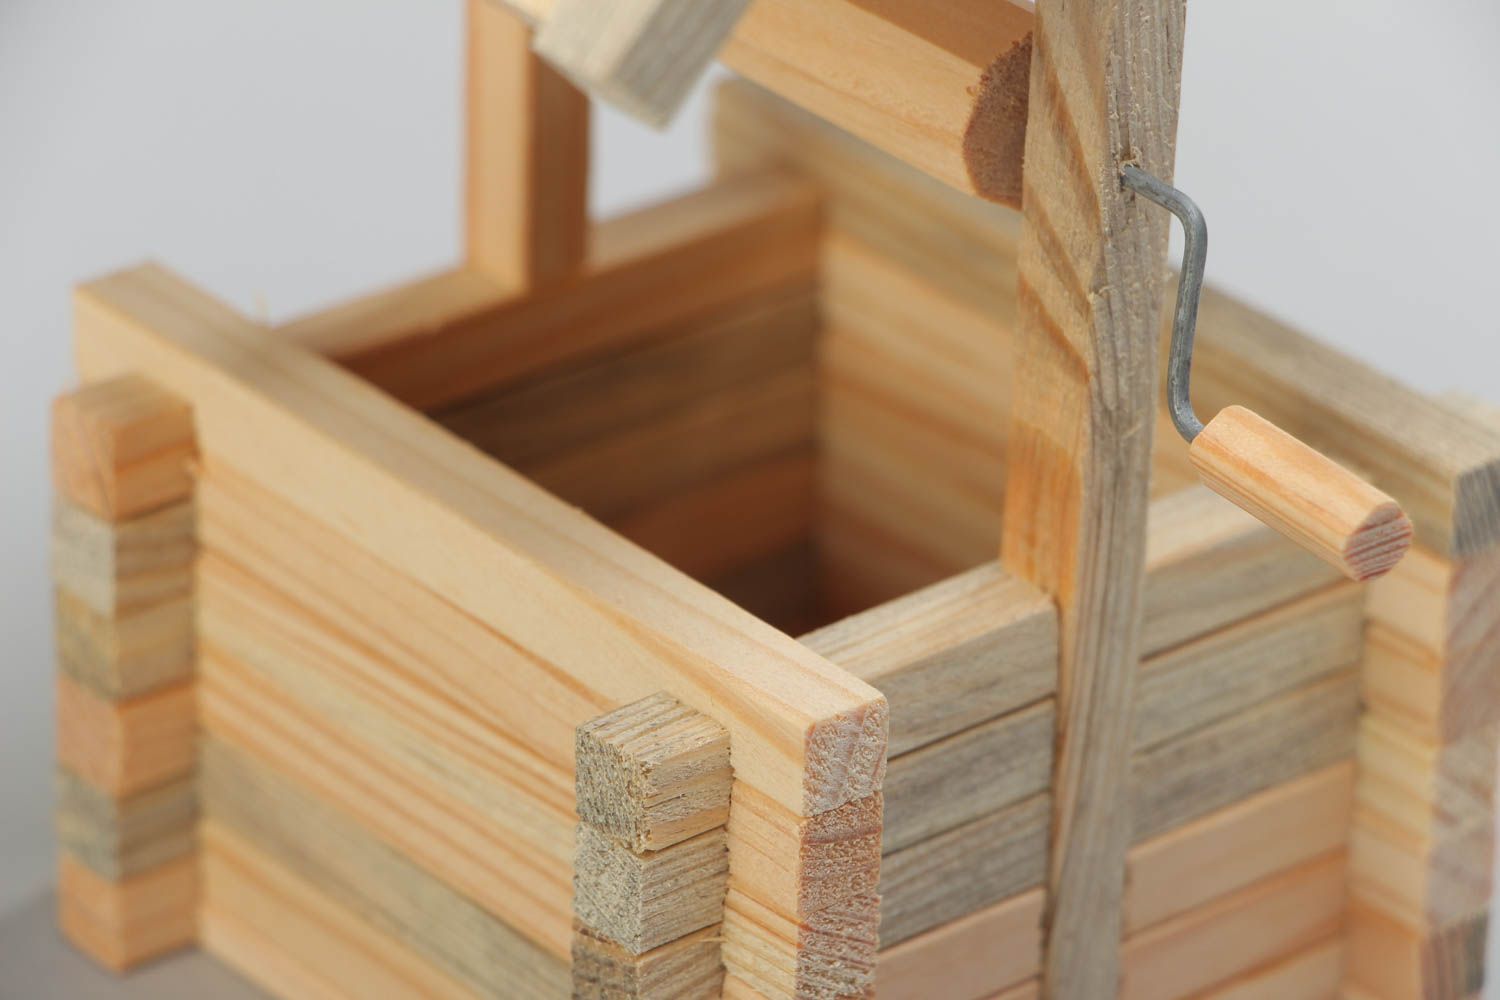 Mecano de madera pozo de 59 detalles juguete de desarrollo artesanal  foto 4